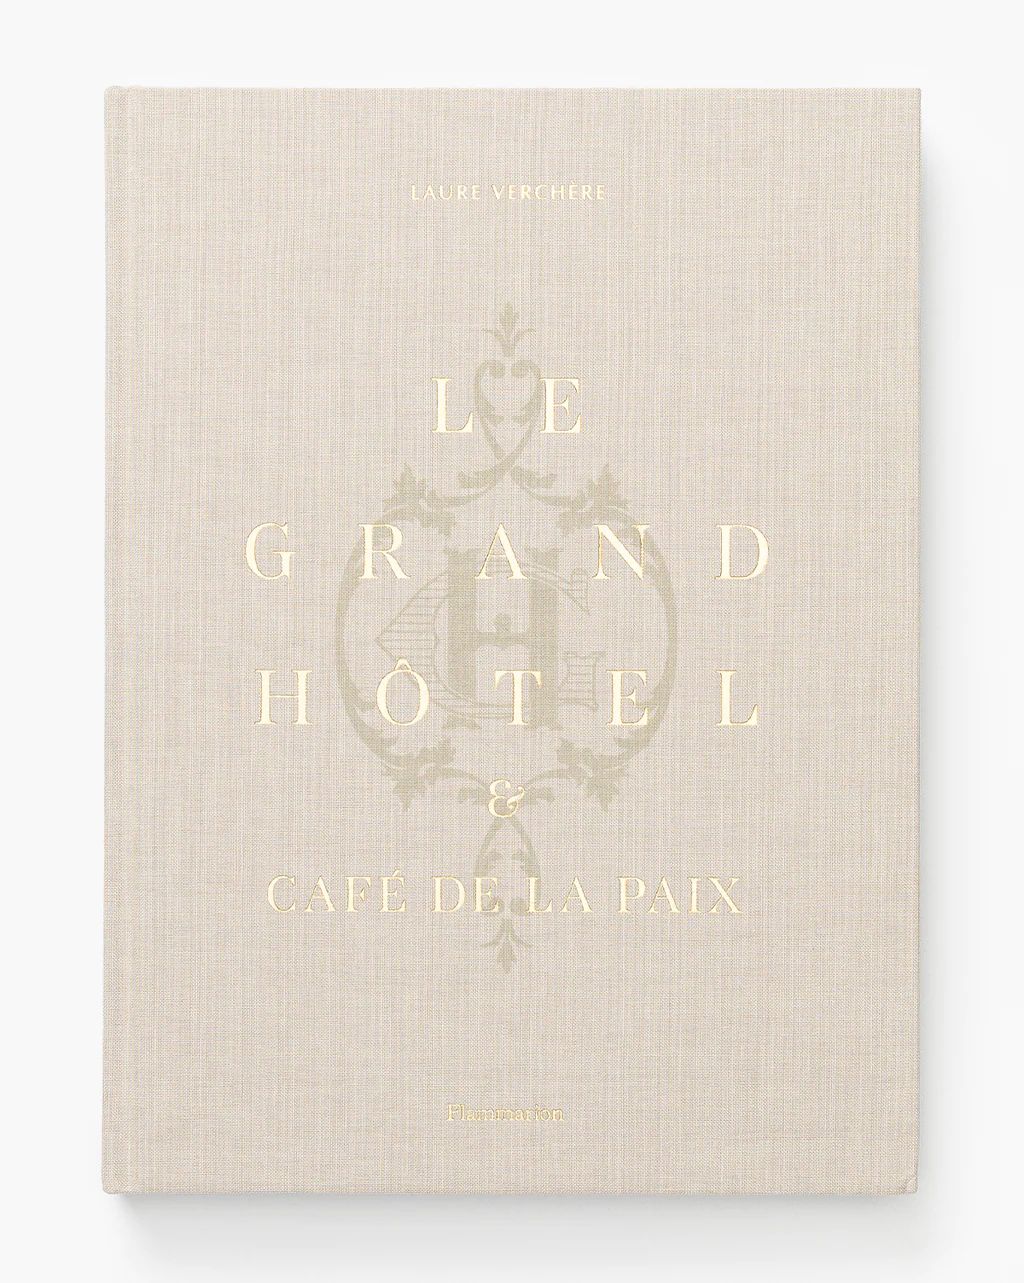 Le Grand Htel & Caf de la Paix | McGee & Co.